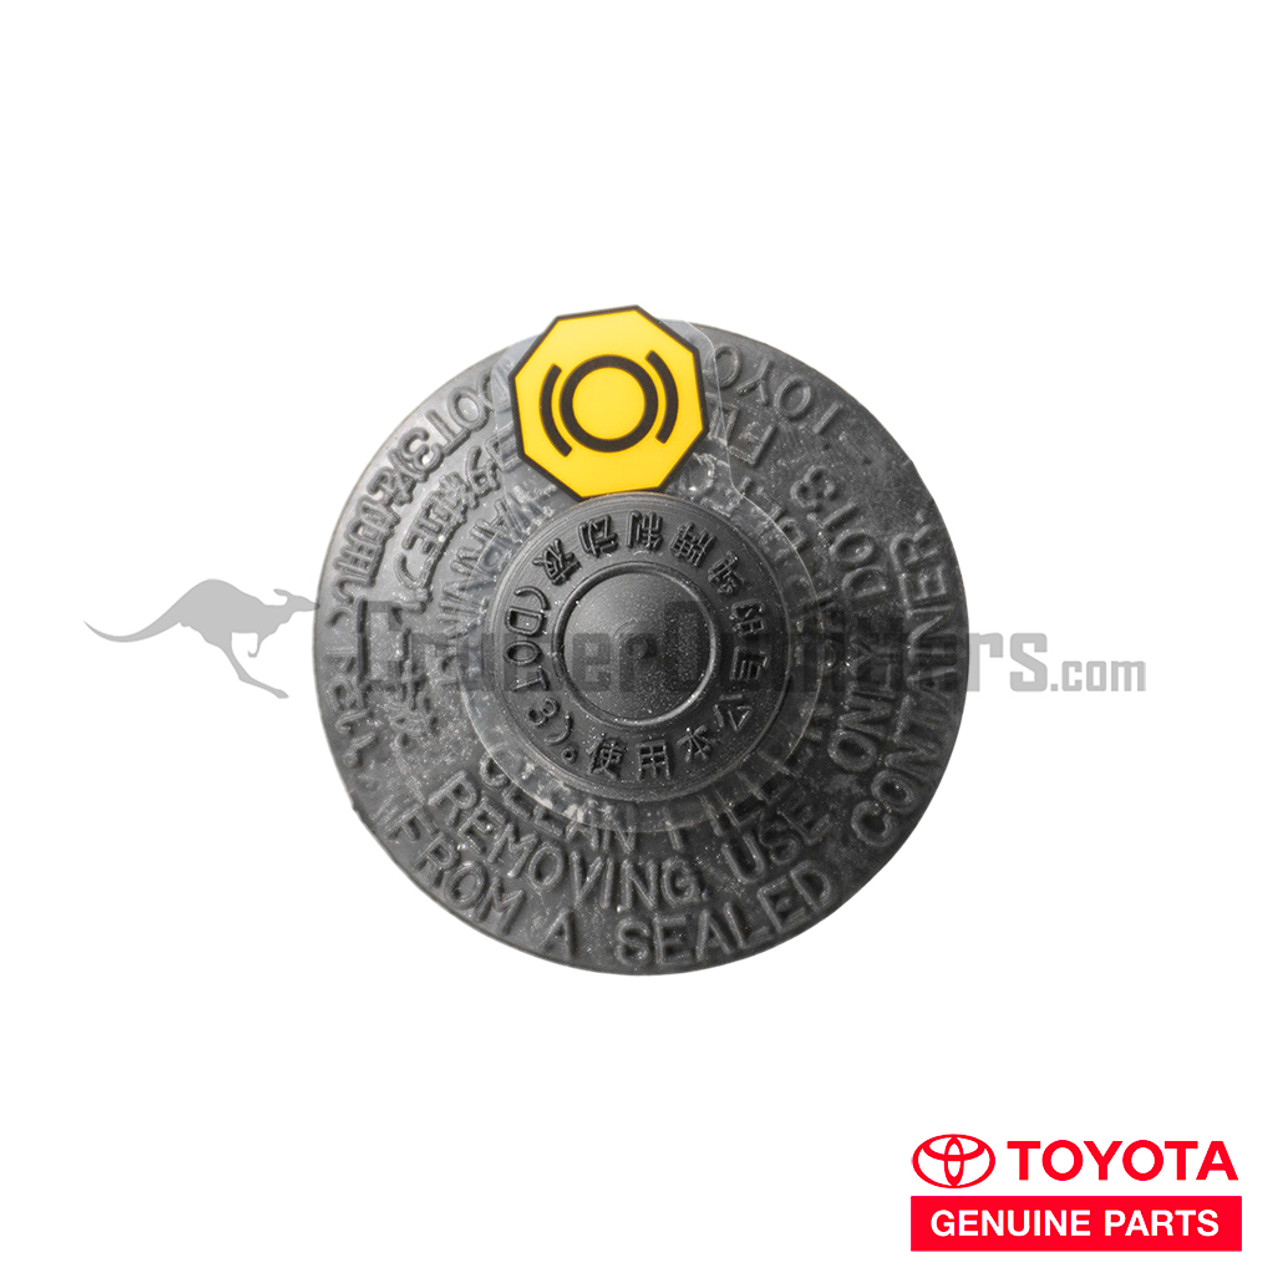 Master Cylinder Cap - OEM Toyota - Fits (BRCAP20140) (BRCAP20140)